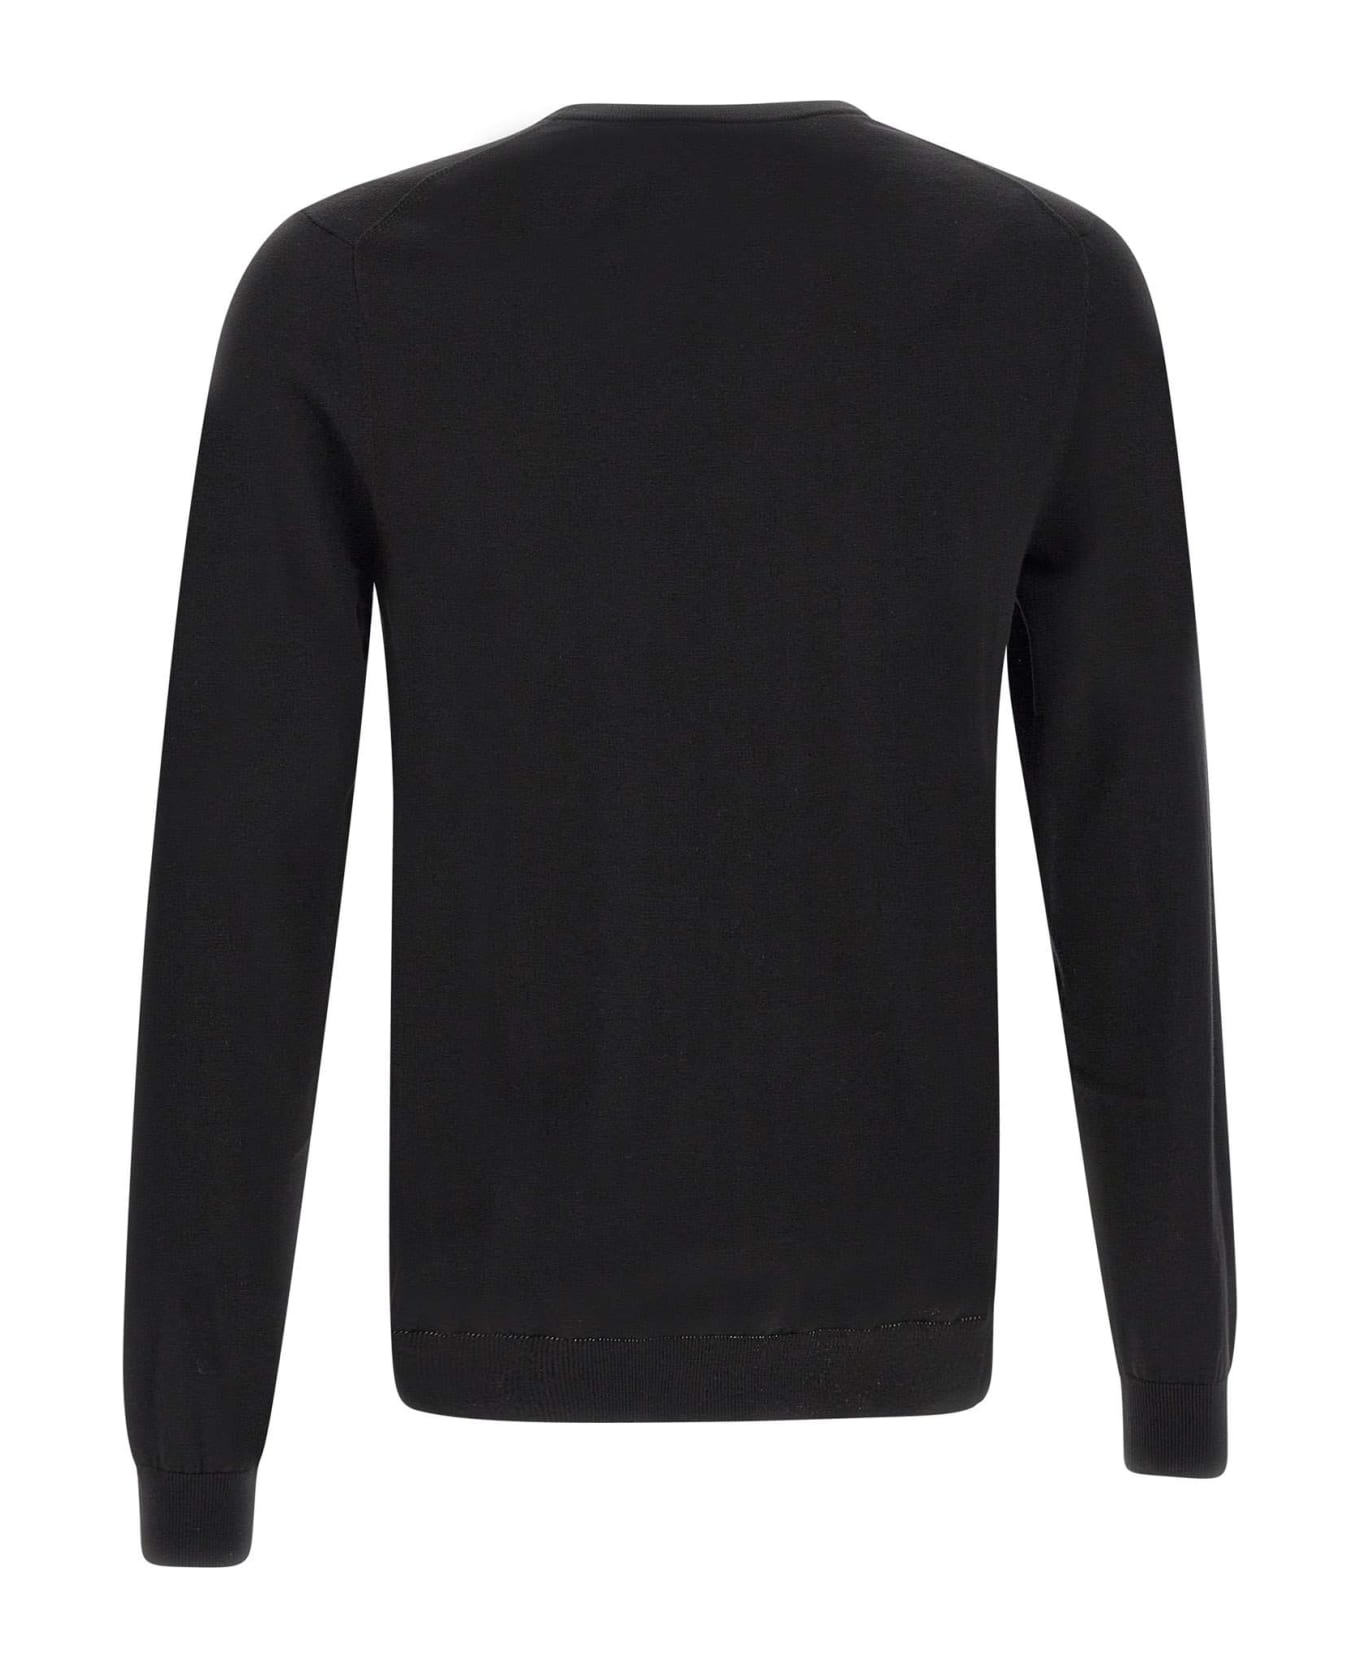 Sun 68 "solid" Cotton Sweater - BLACK ニットウェア